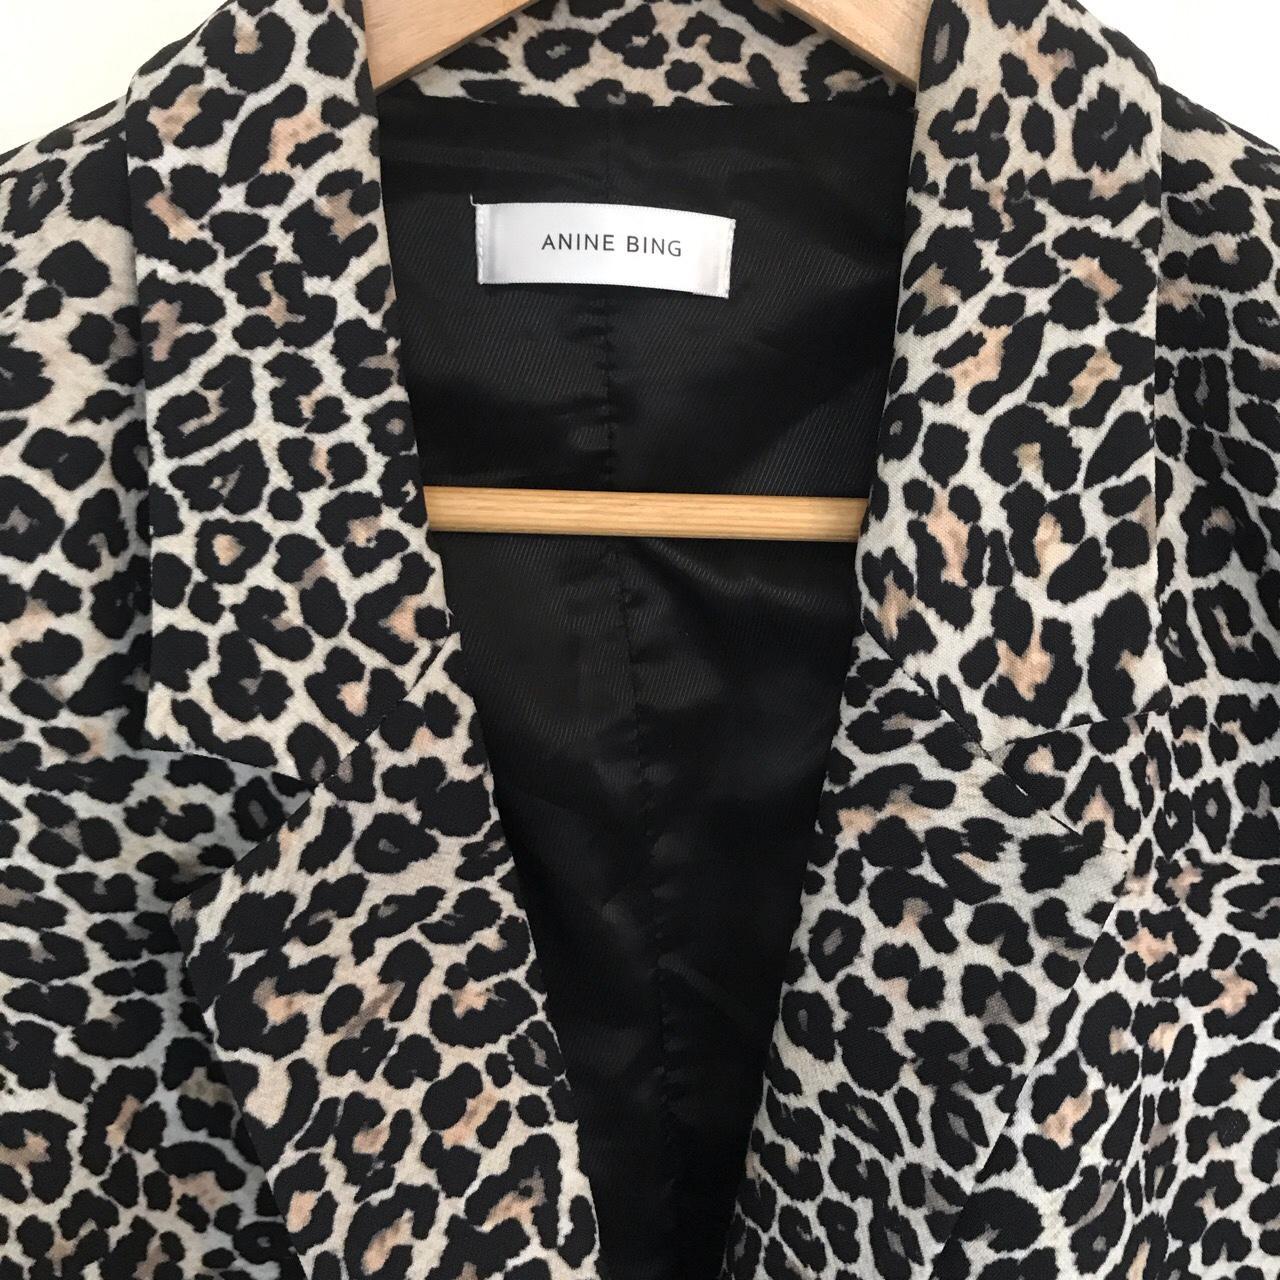 Anine bing leopard print blazer jacket size... - Depop